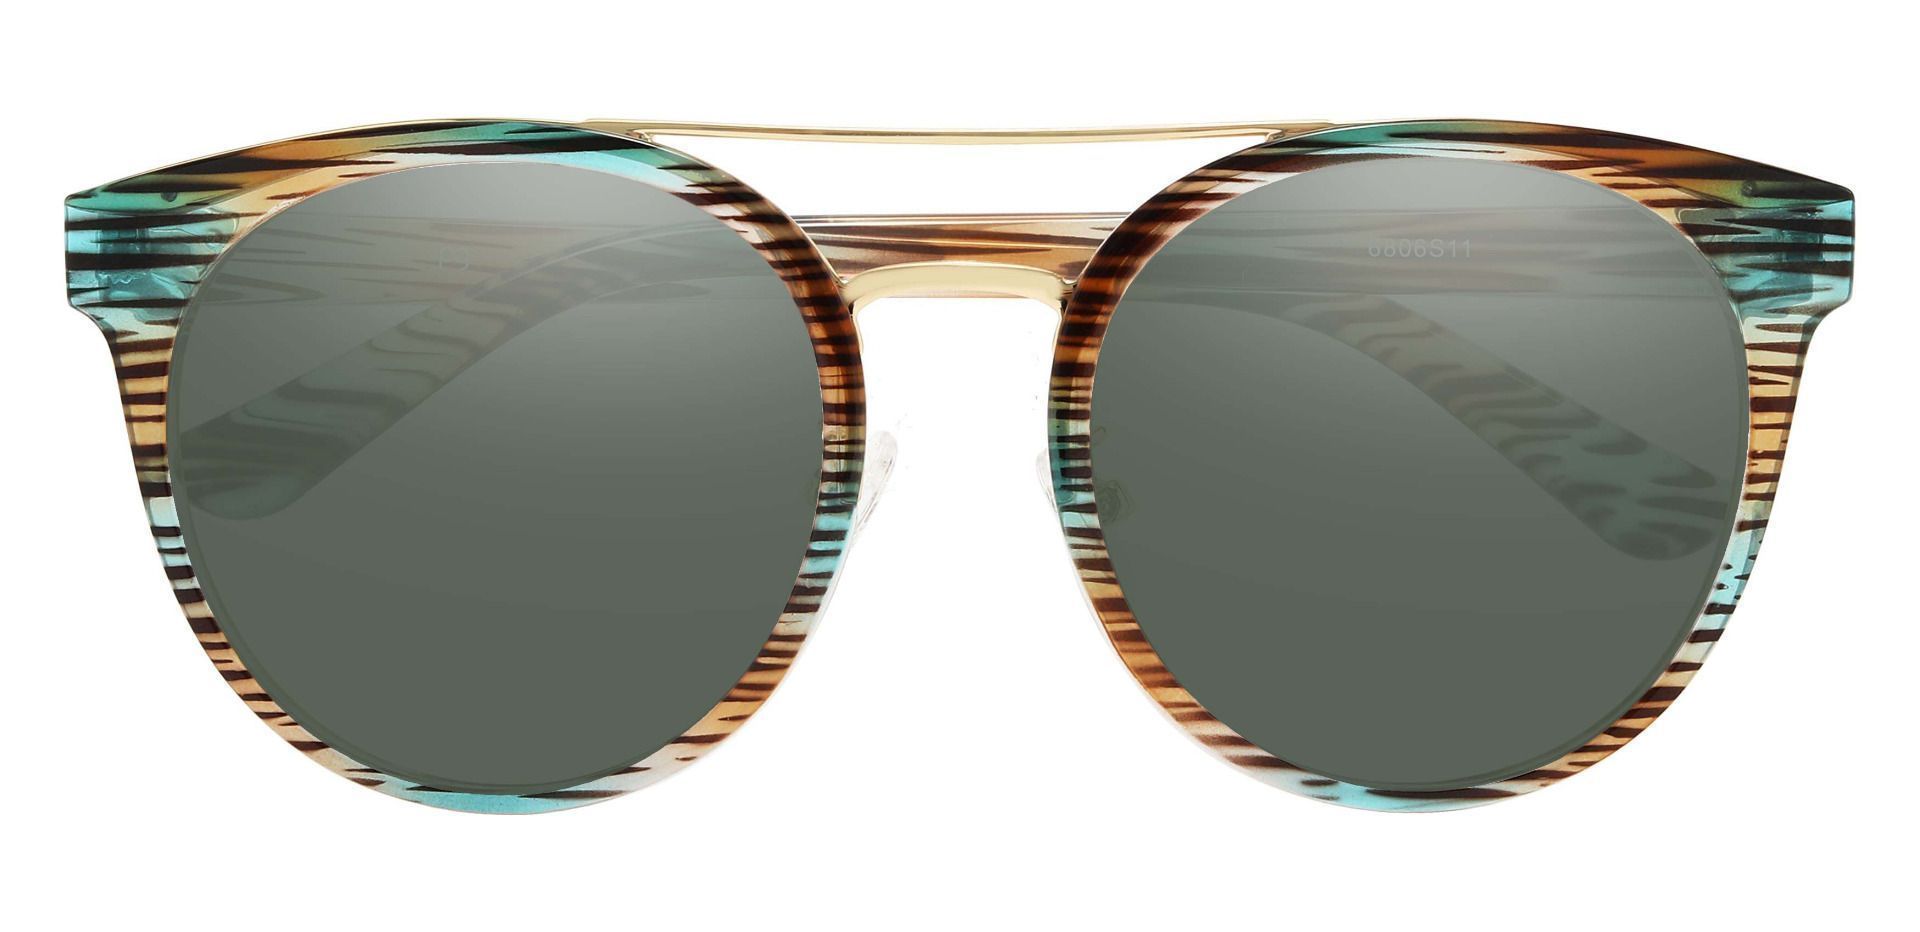 Oasis Aviator Prescription Sunglasses - Striped Frame With Green Lenses